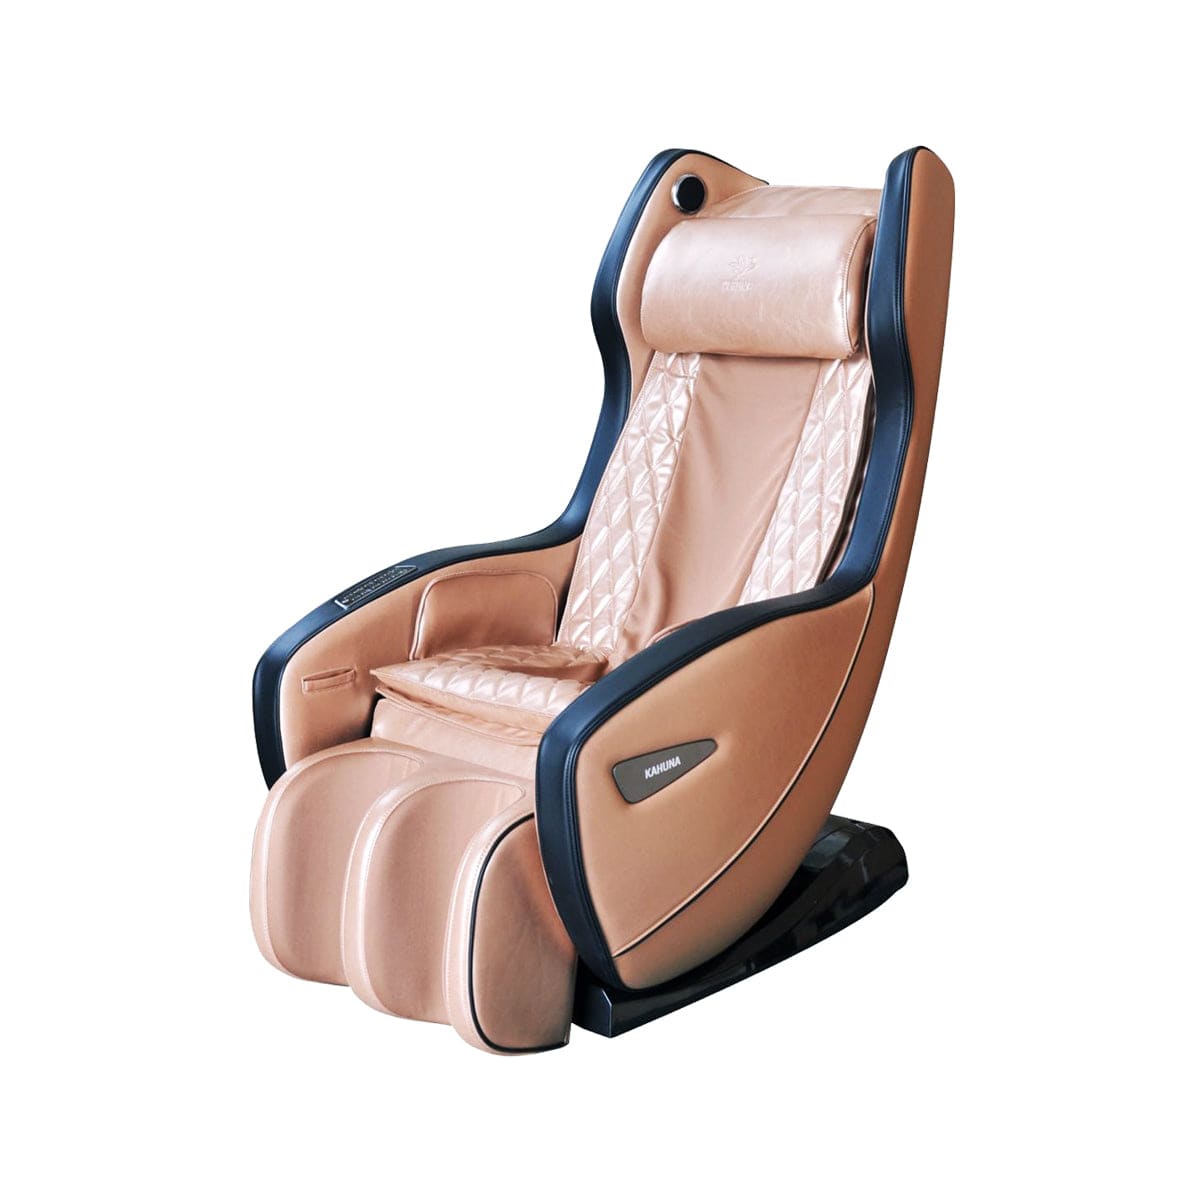 Kahuna Chair – [CM] L-Track Zero Gravity Compact Kahuna Massage Chair, Hani3800 [Gold]